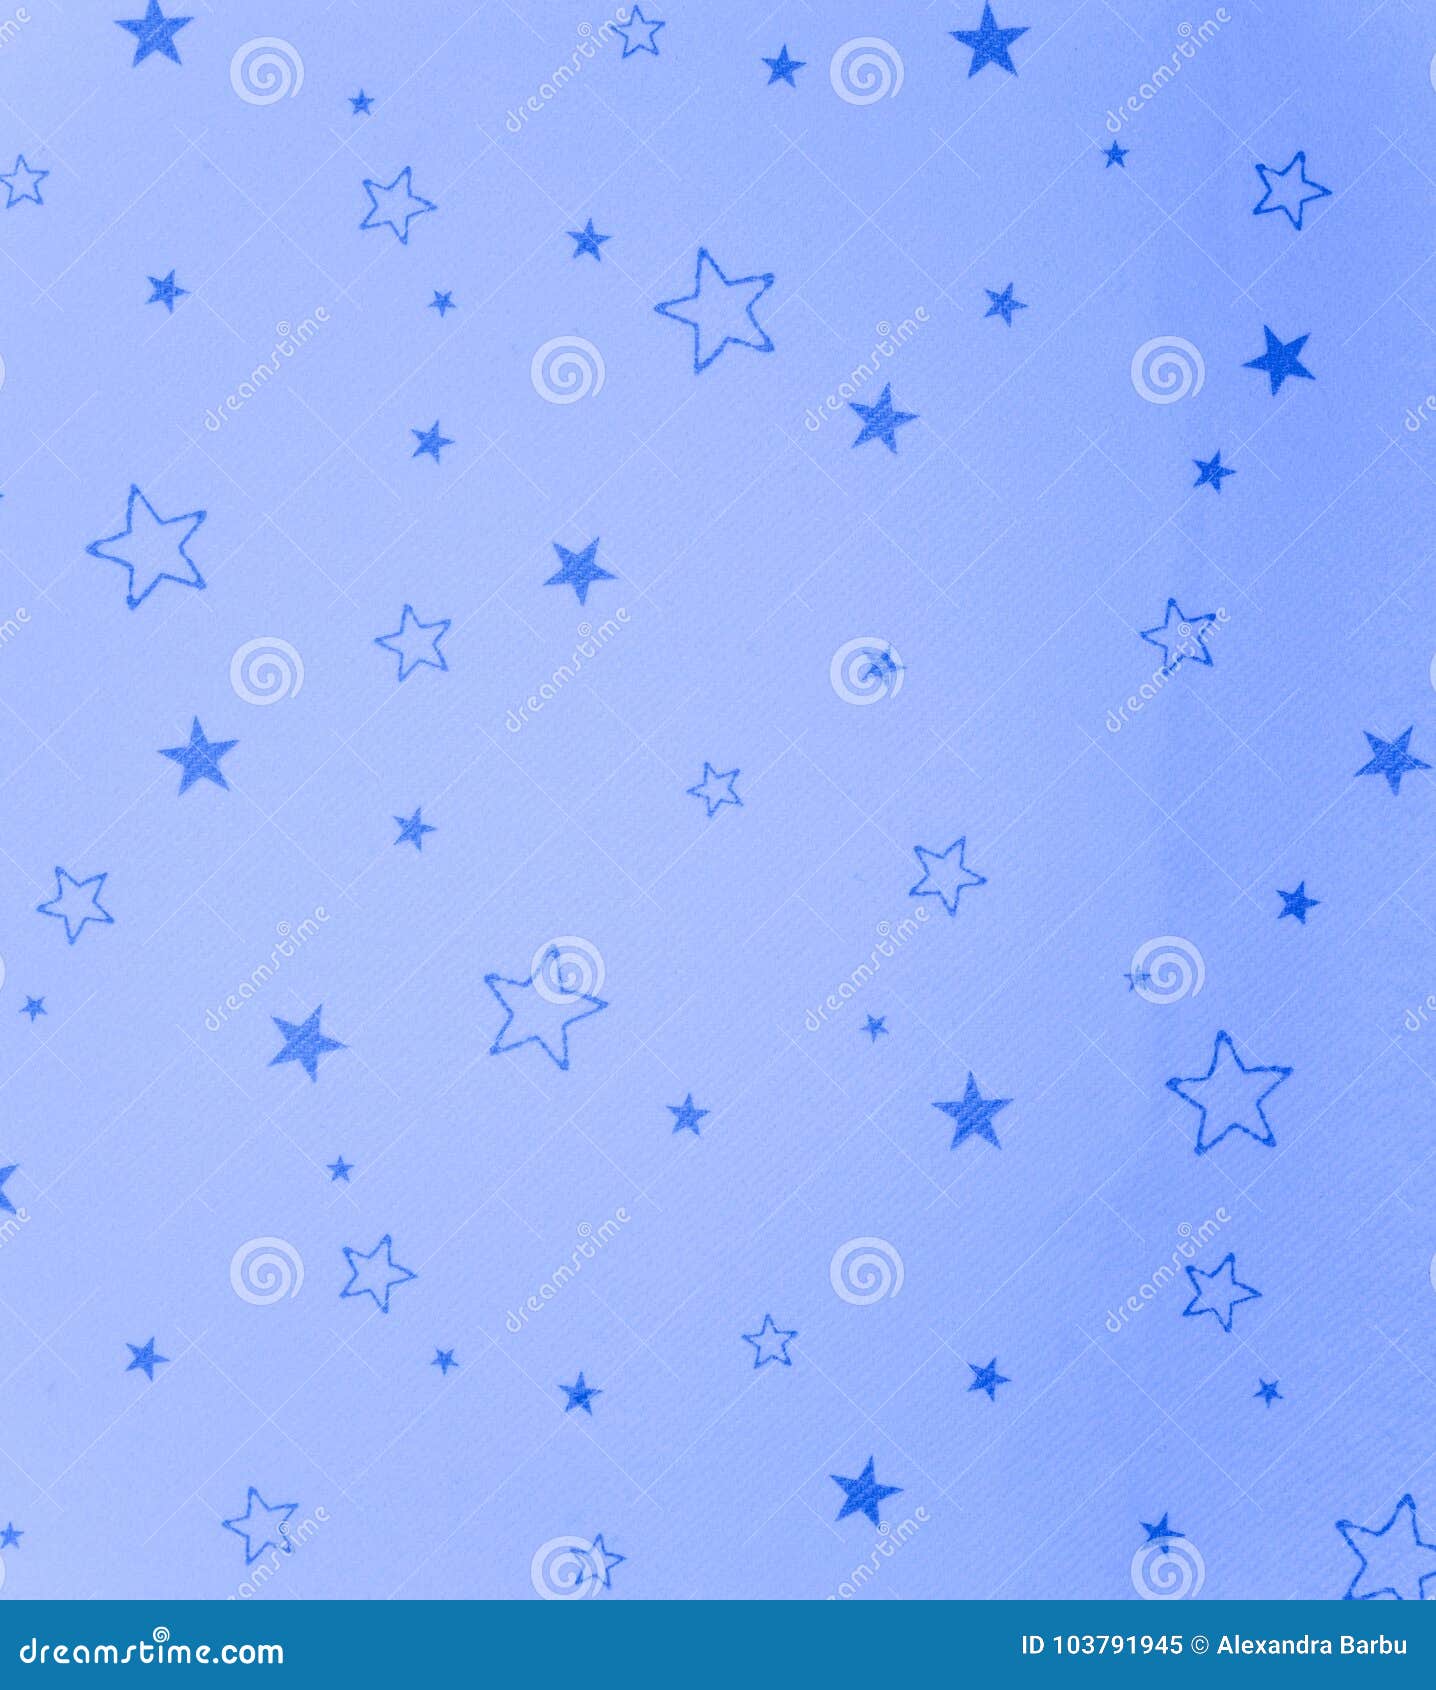 Blue Stars Seamless Pattern Background Stock Image - Image of closeup ...